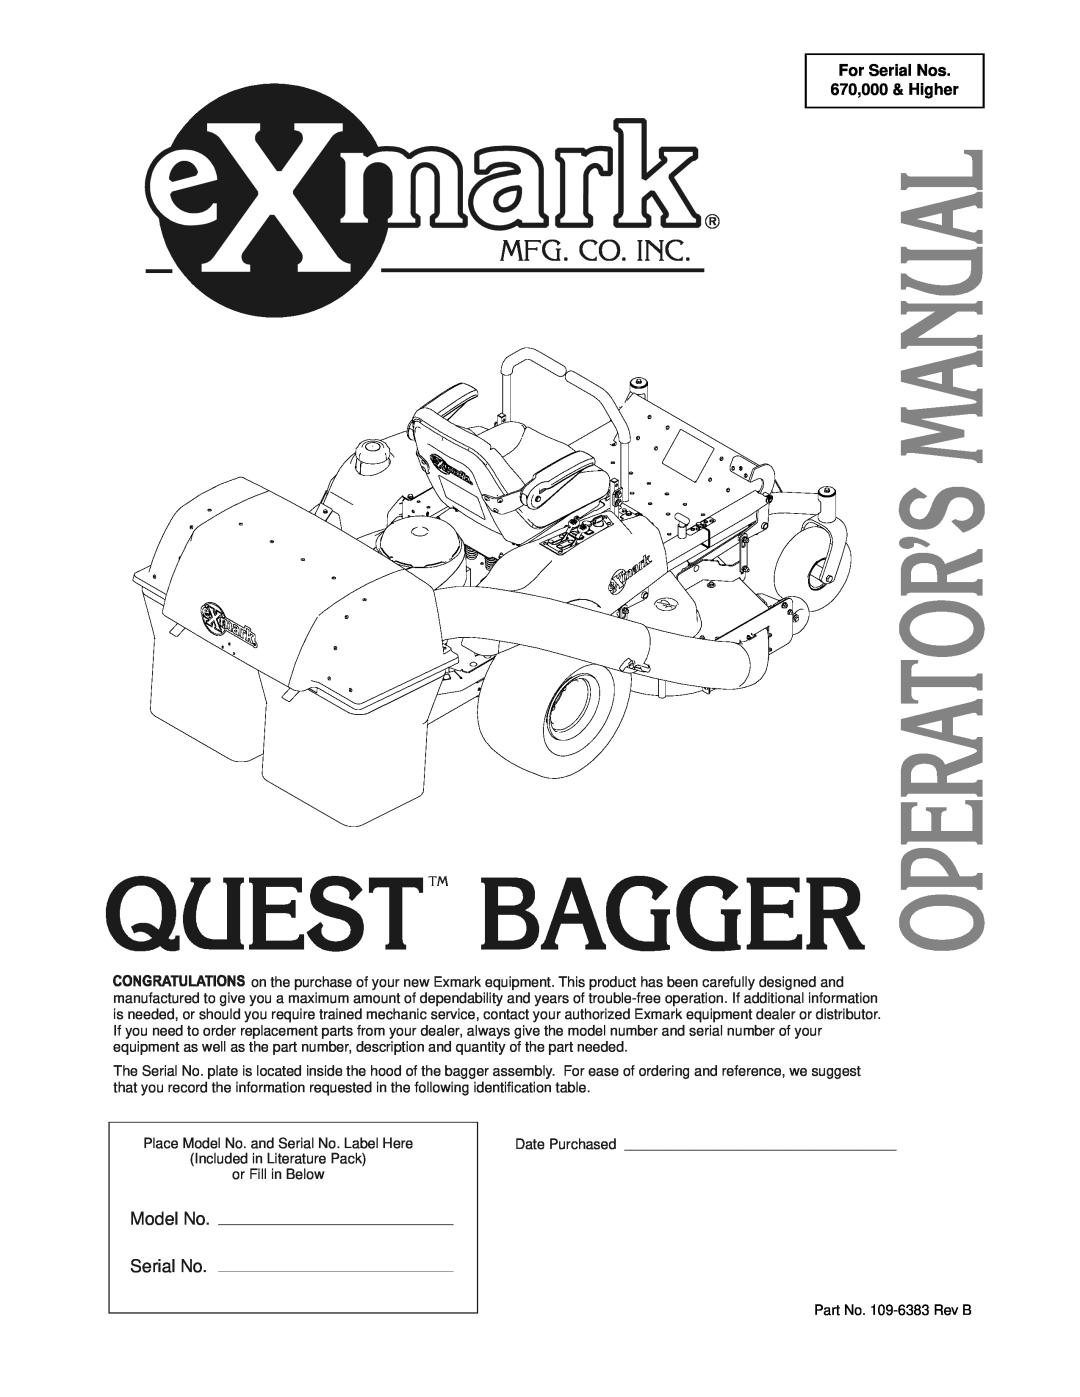 Exmark Quest Bagger manual Mfg. Co. Inc, Model No Serial No, For Serial Nos 670,000 & Higher 